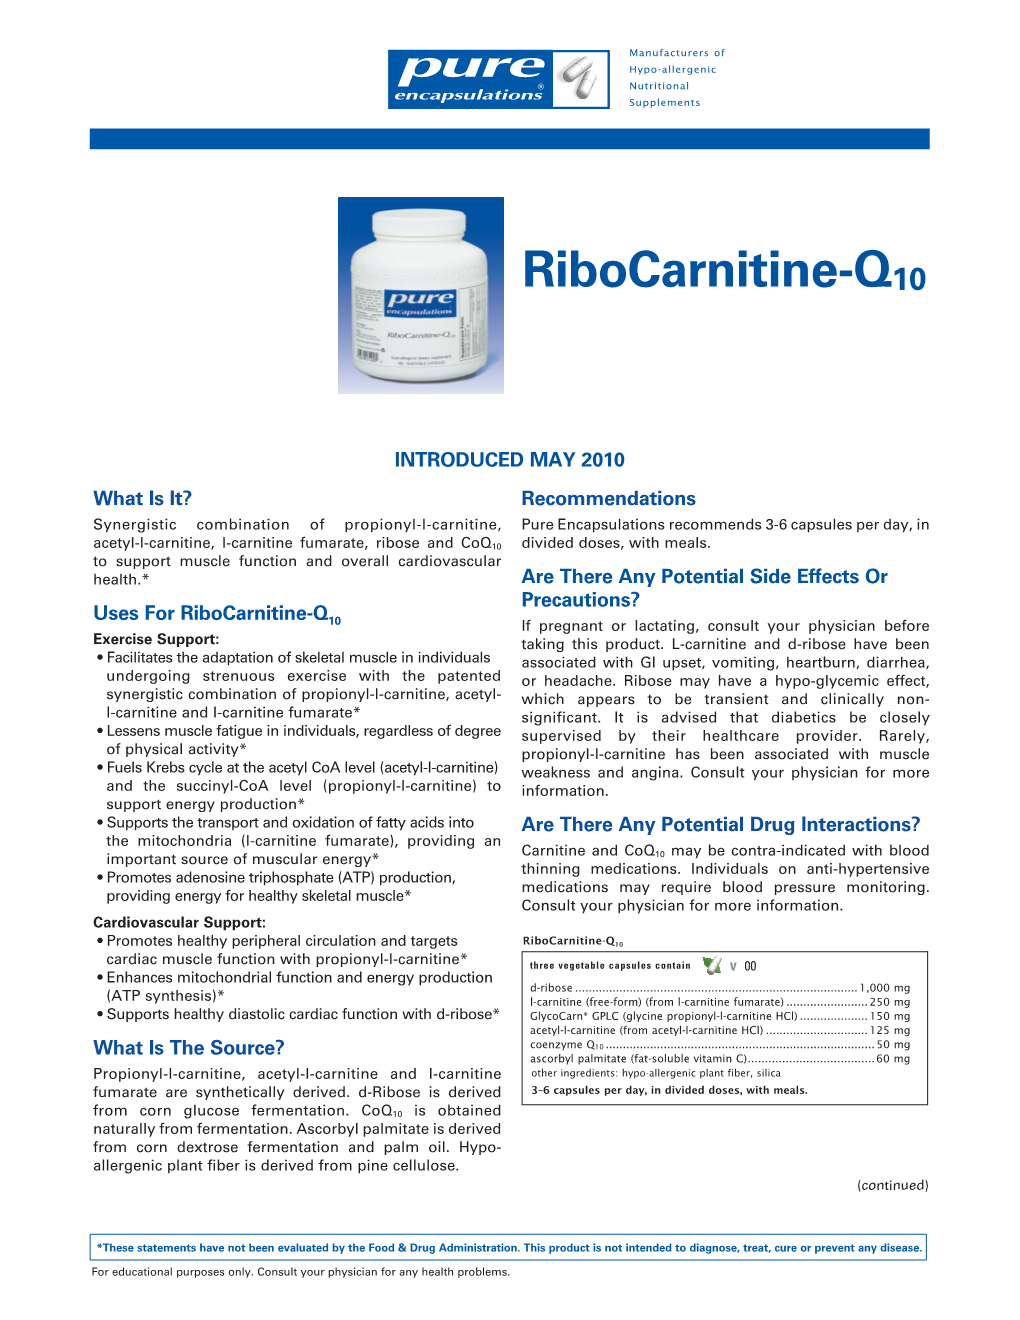 Ribocarnitine-Q10